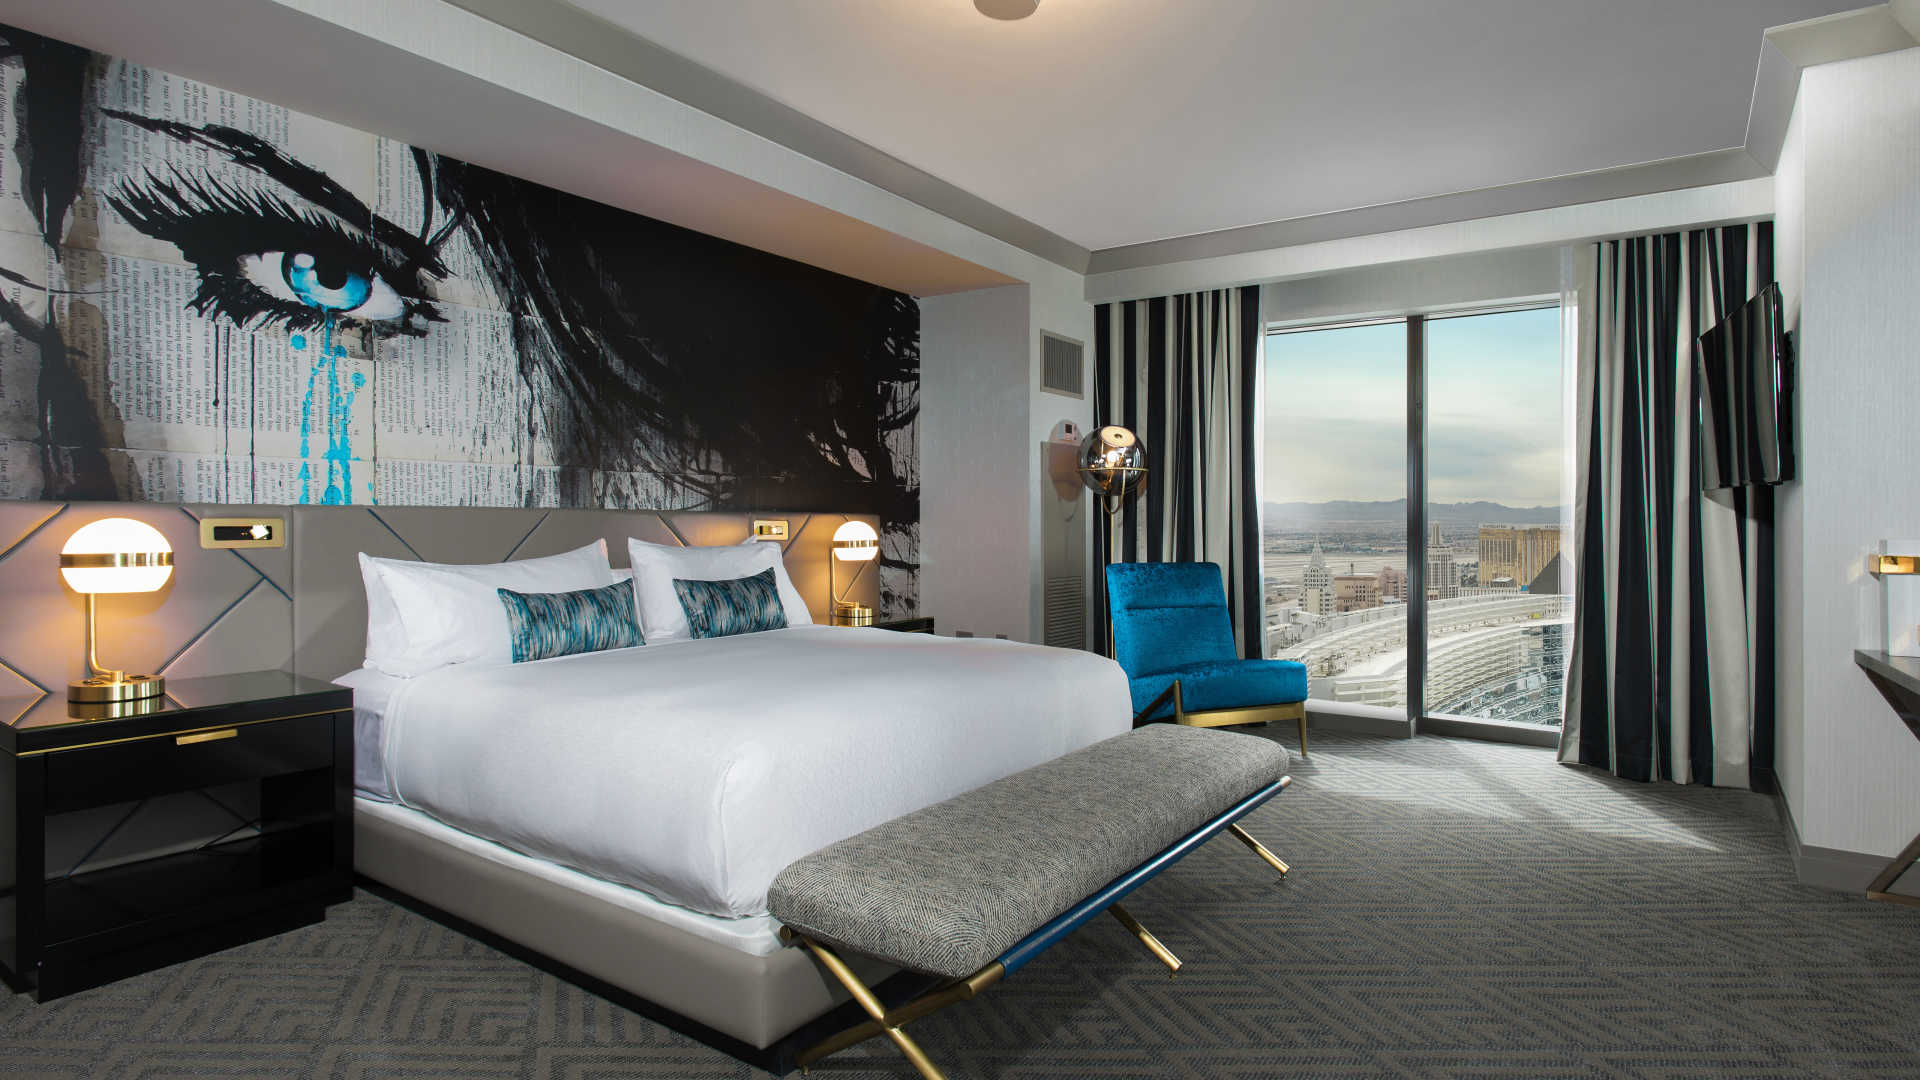 Las Vegas Luxury Hotel Rooms and Suites | The Cosmopolitan